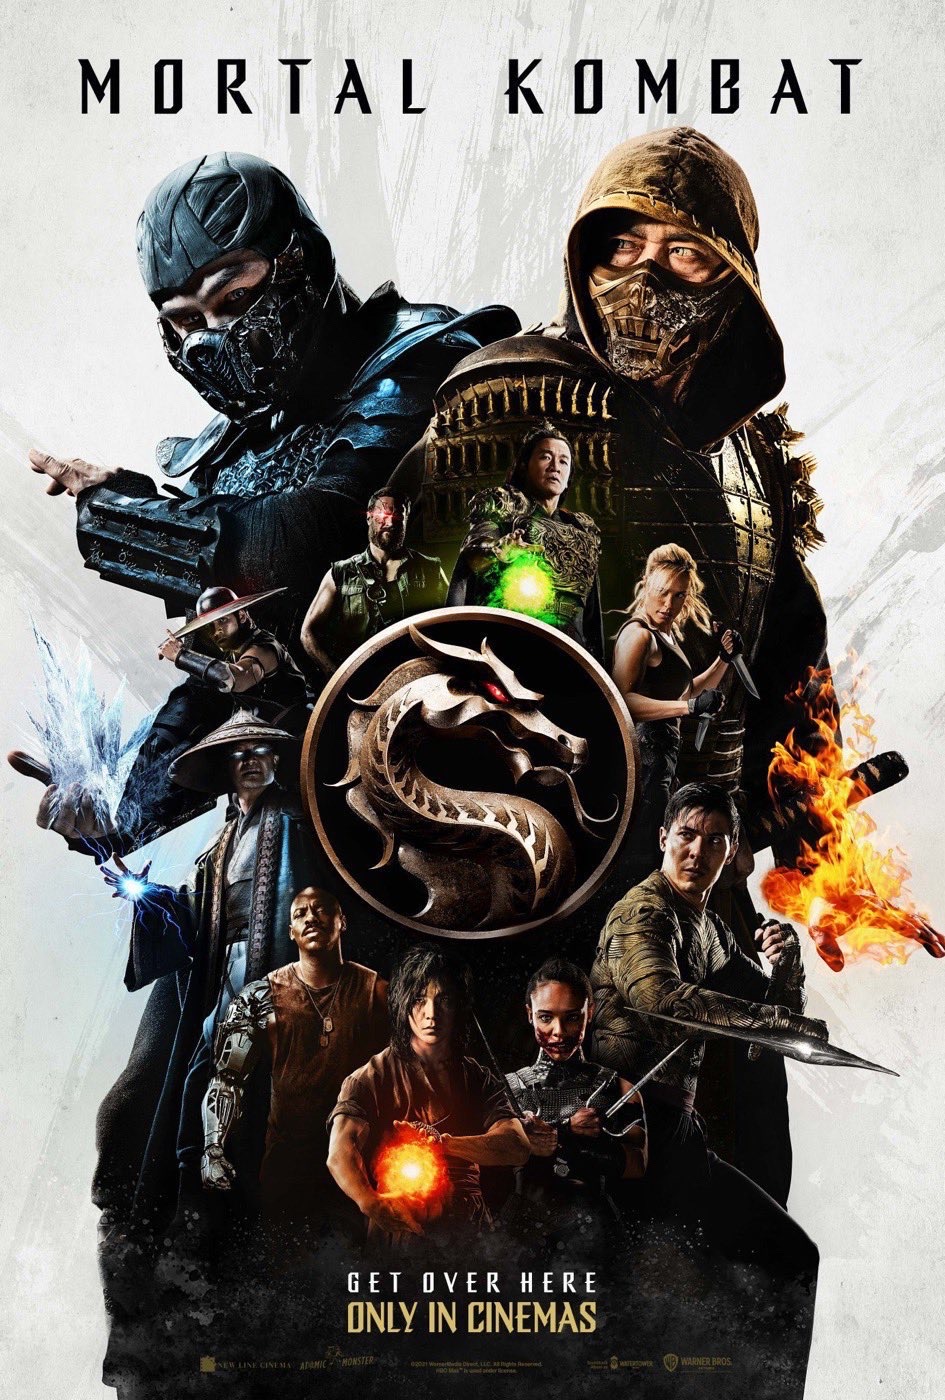 Mortal Kombat (2021) Poster Art by truvneeck on DeviantArt